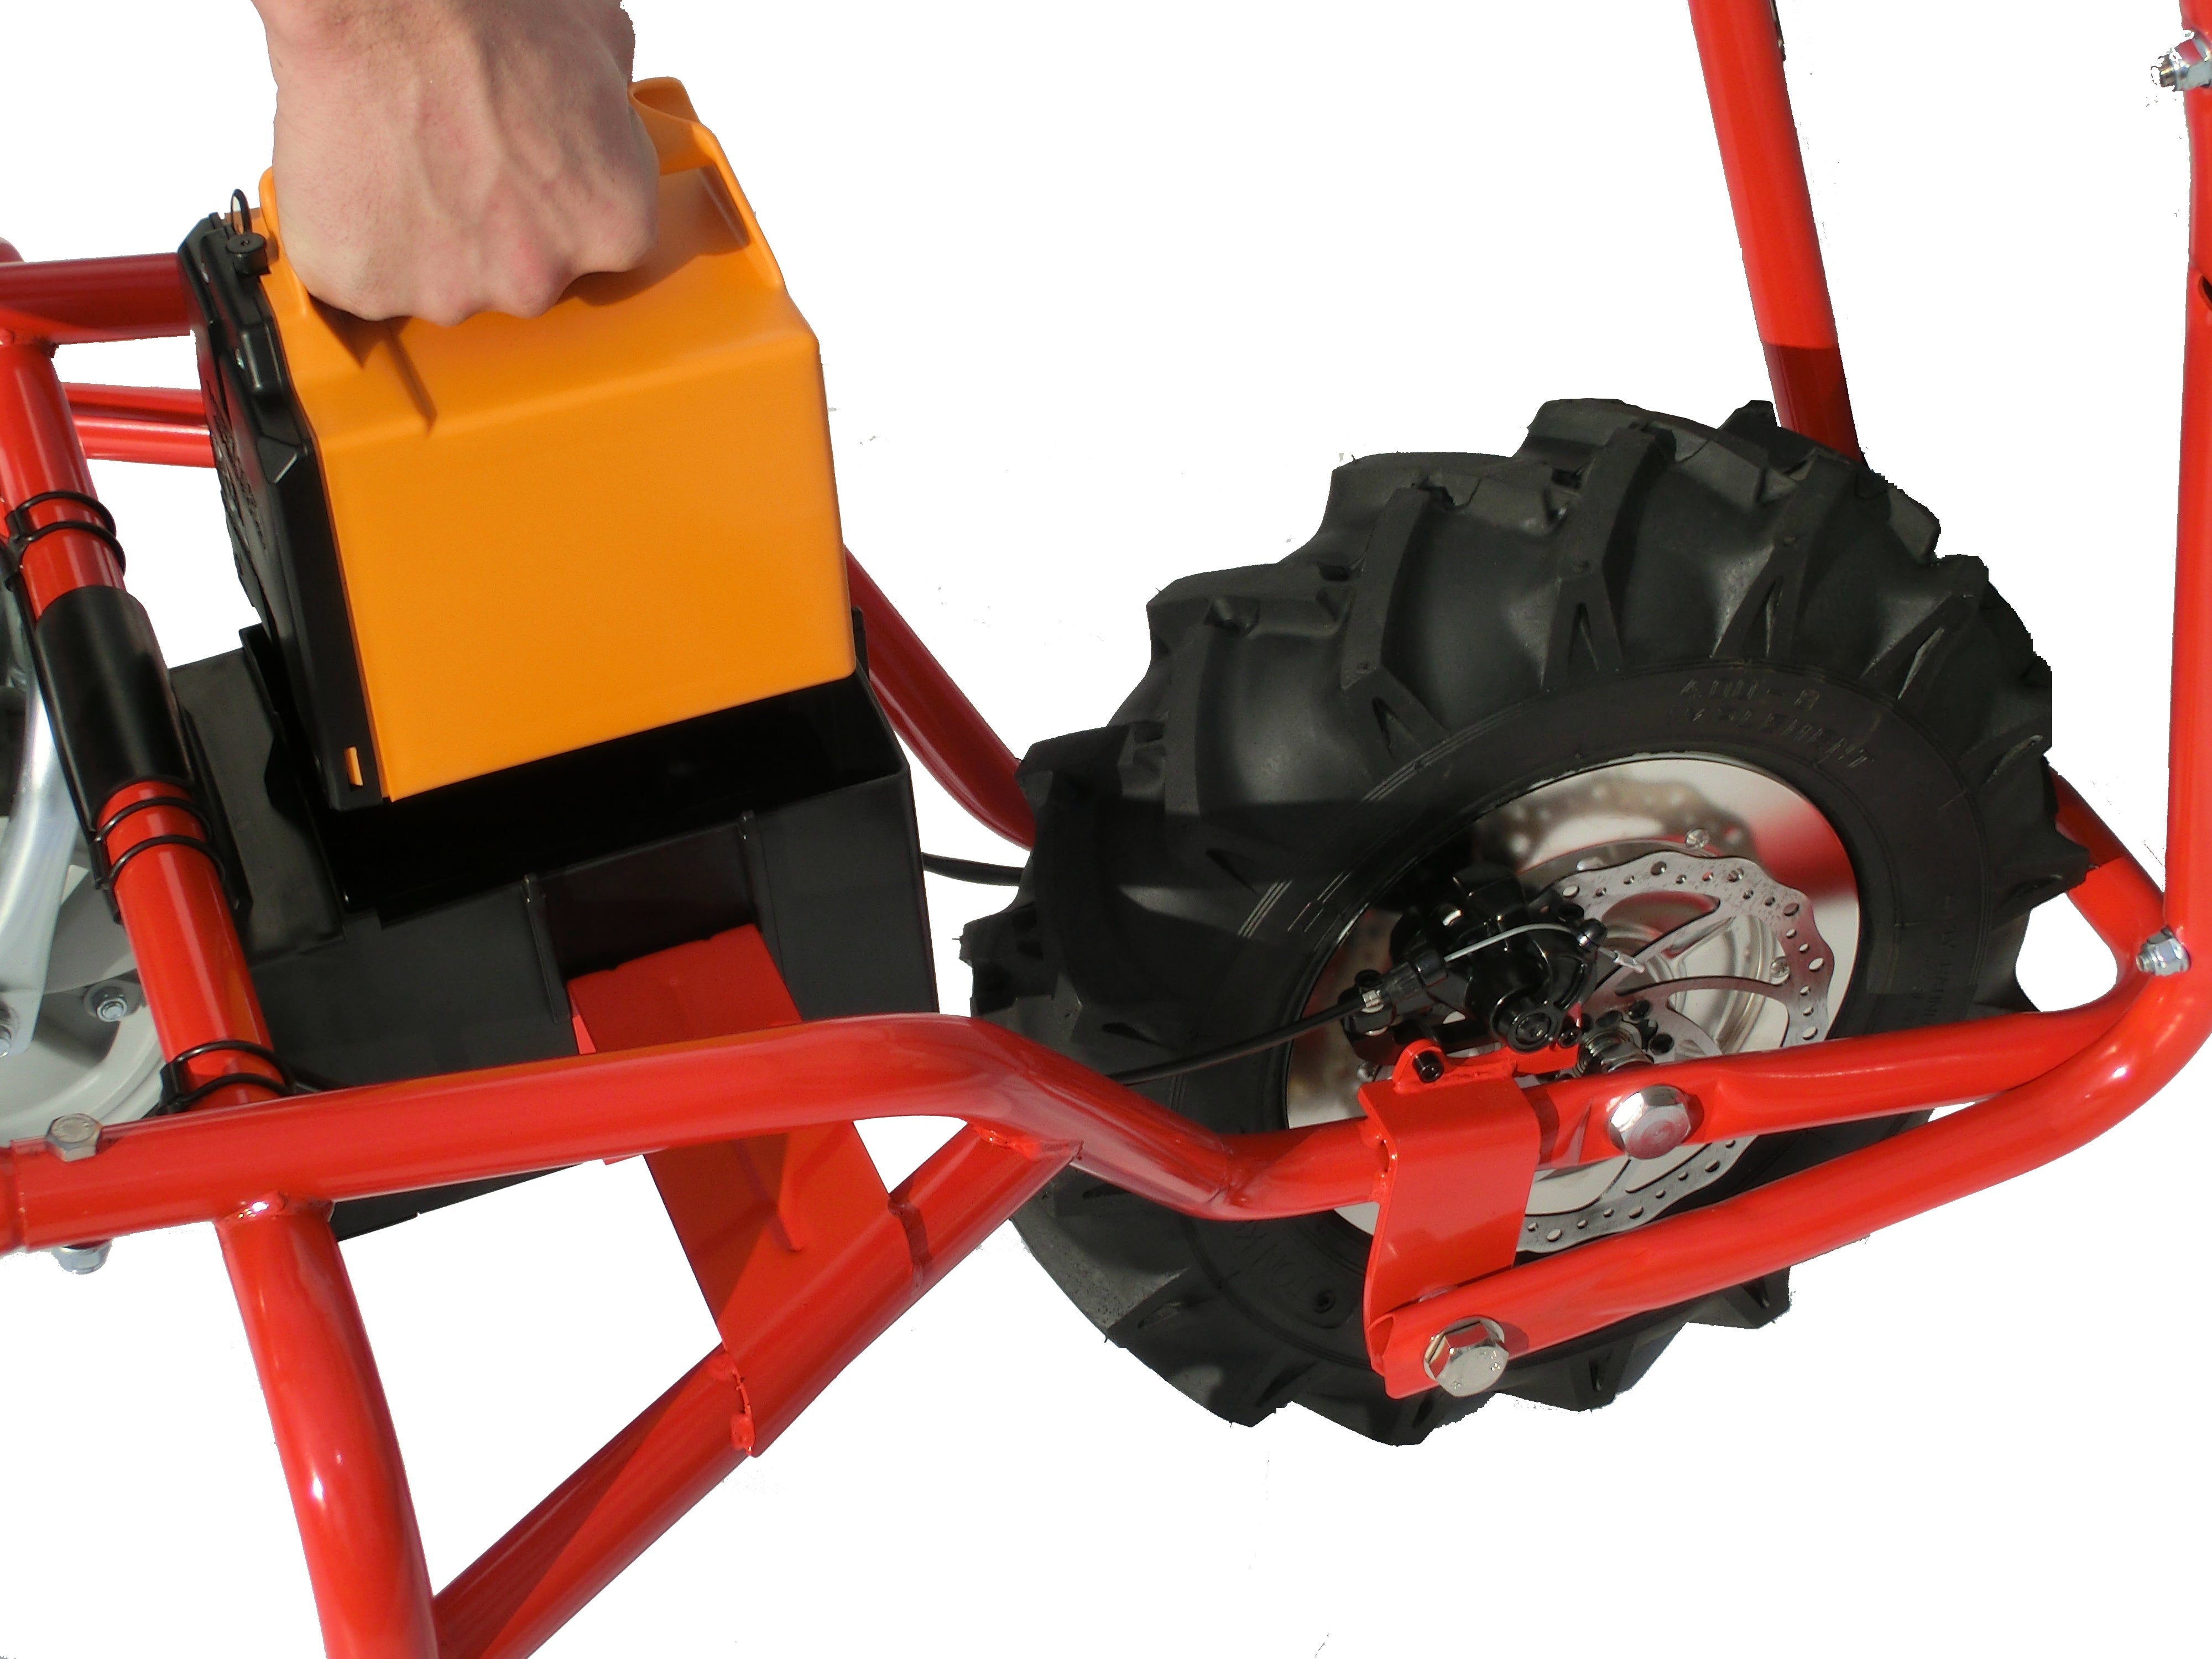 PowerPac electric wheelbarrow battery / electric dumper